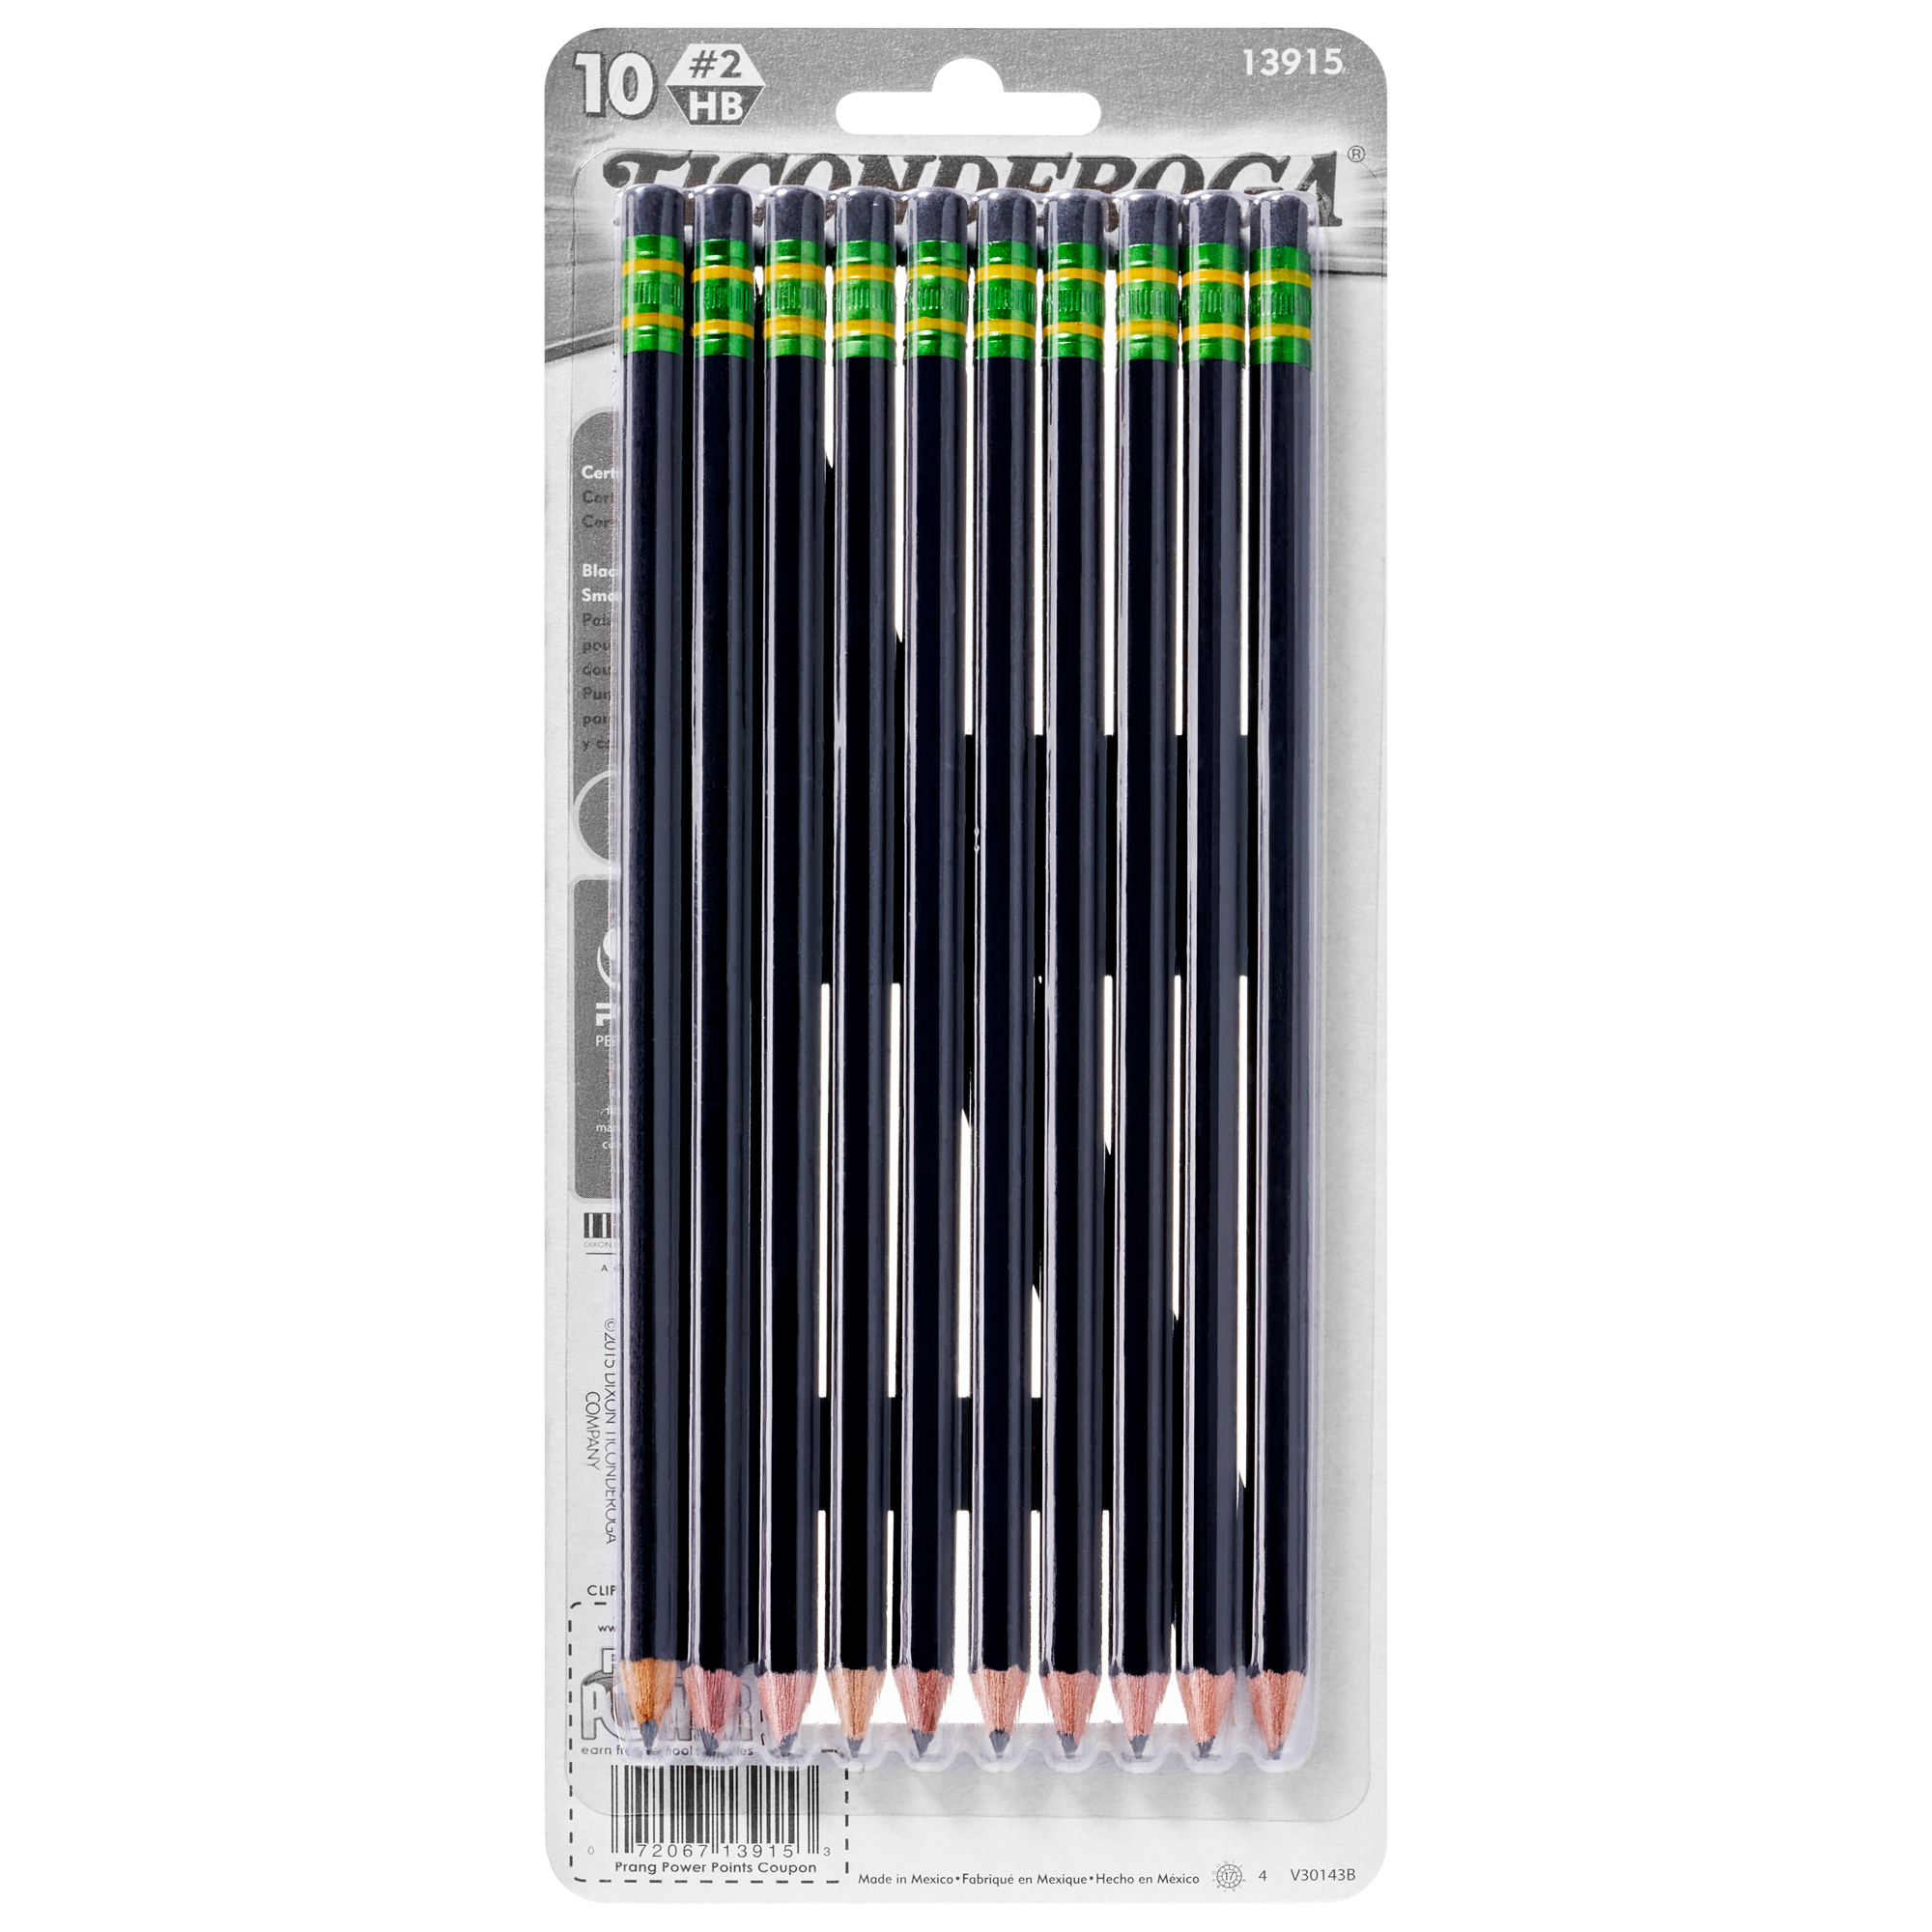 Pencils 24-Pack 1 Wood-Cased Black Graphite #2 HB Soft 